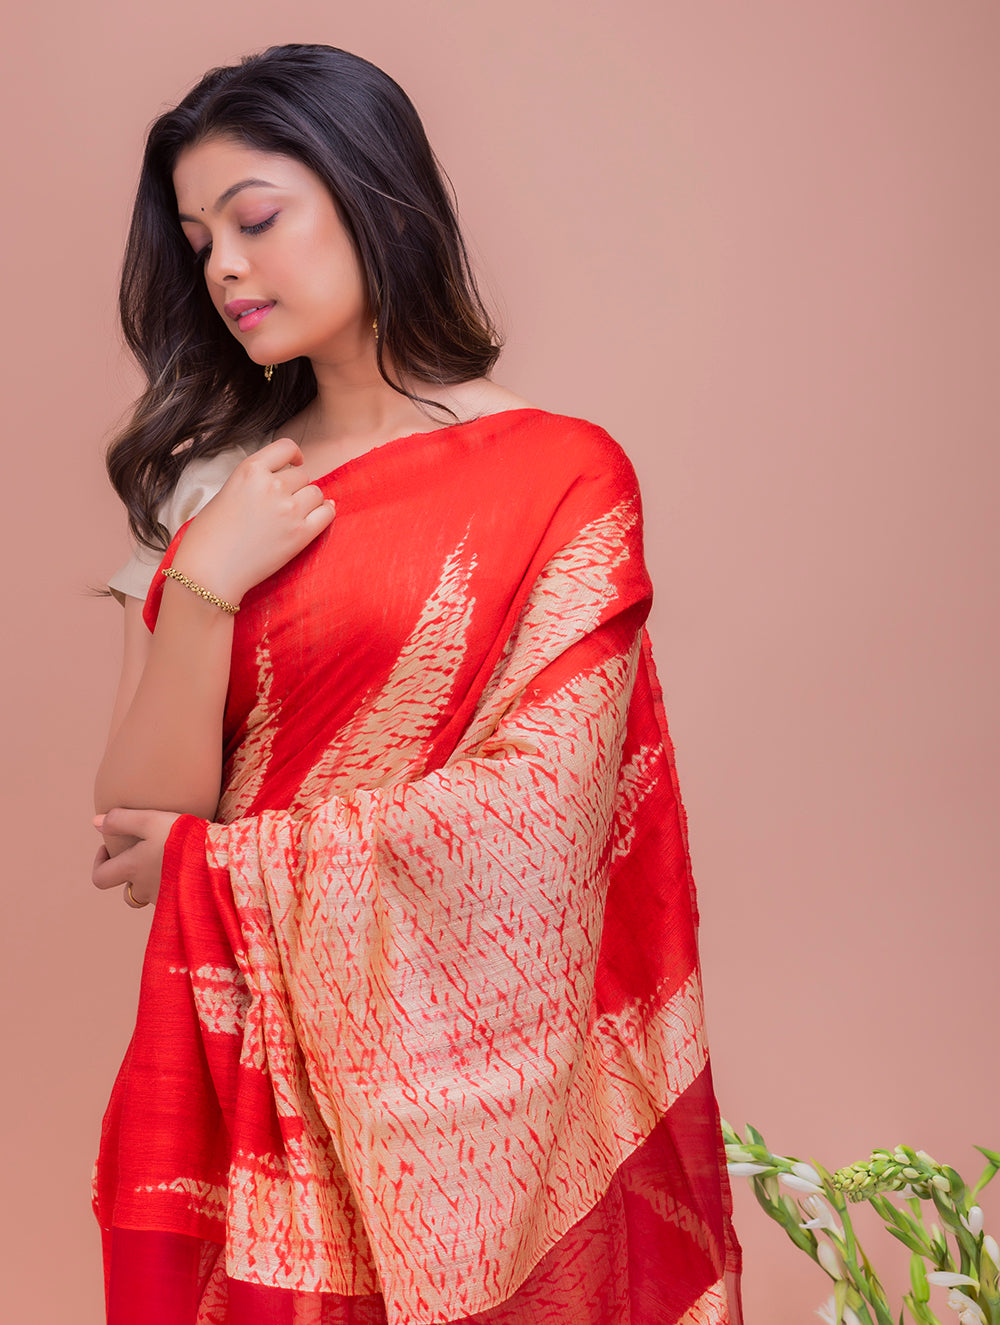 Load image into Gallery viewer, Elegant Bengal Handwoven Matka Silk Shibori Saree - Red &amp; White